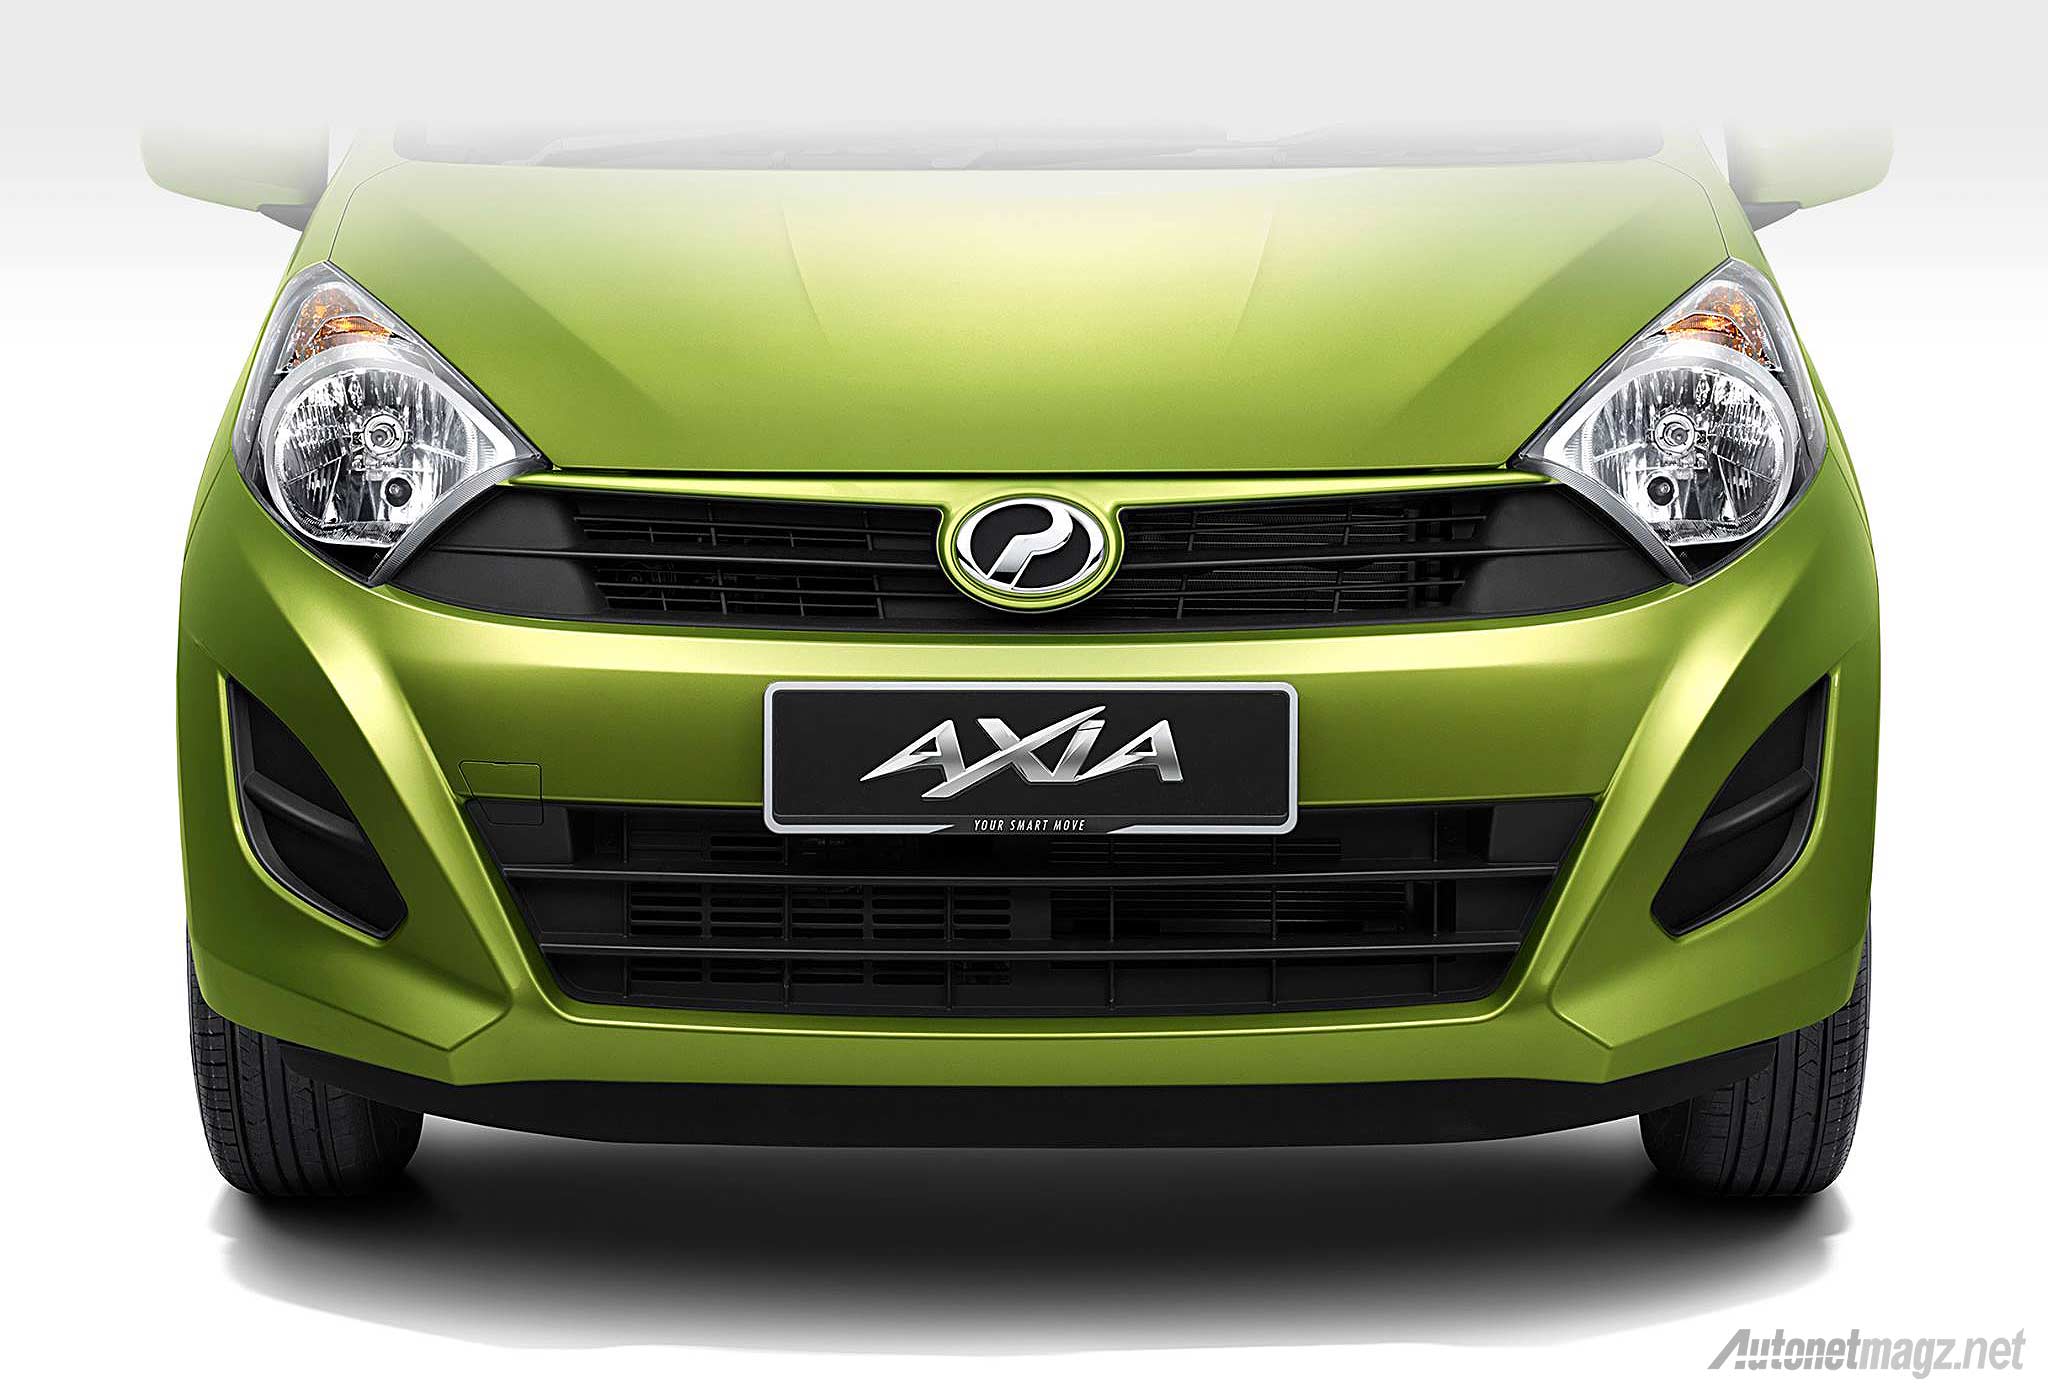 Bodykit Daihatsu Ayla AutonetMagz Review Mobil Dan Motor Baru